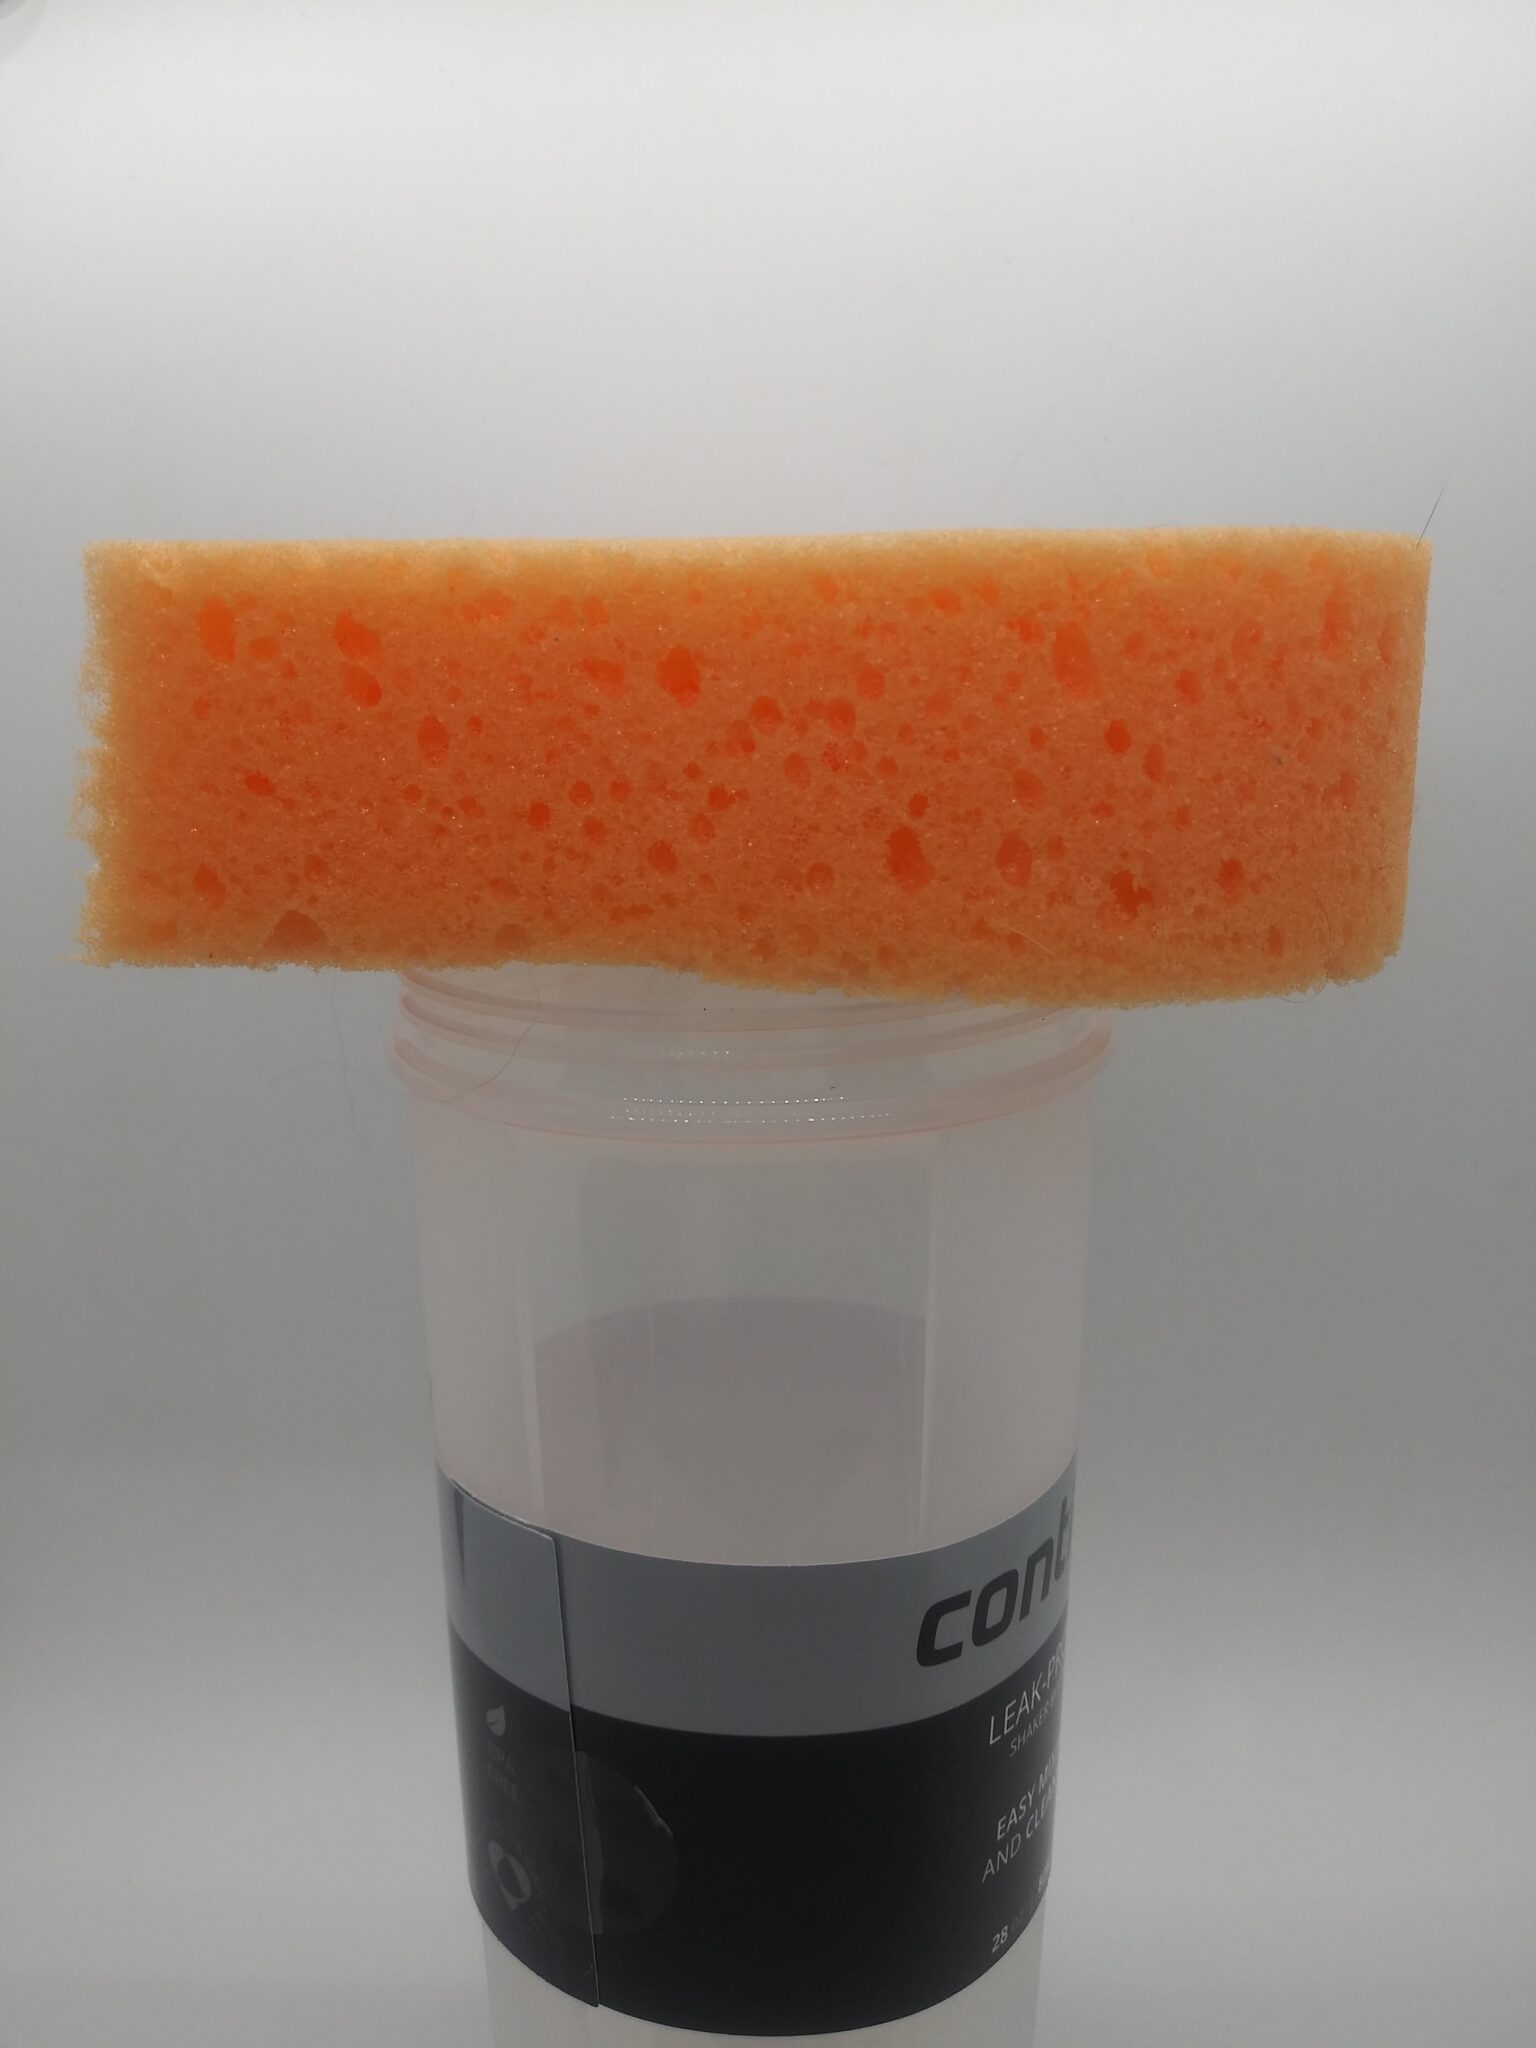 Real Feel DIY Fleshlight showing how to measure sponge for opening.